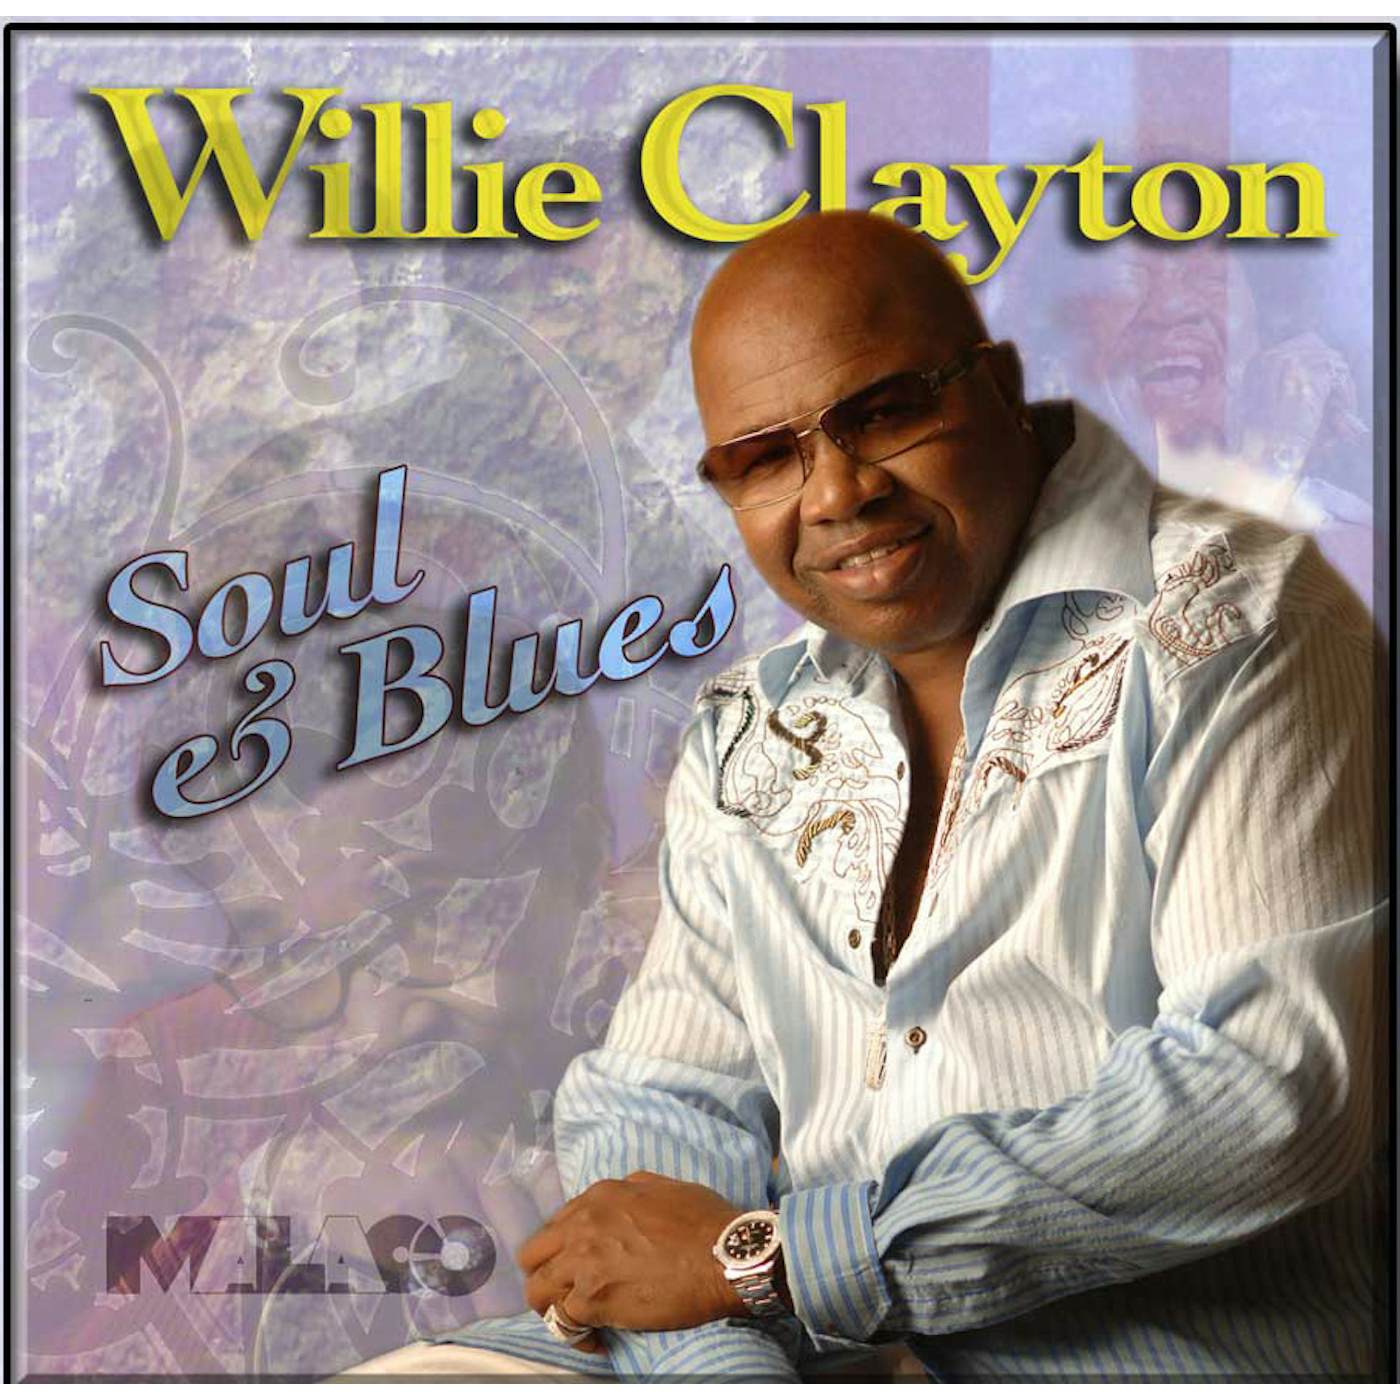 Willie Clayton Soul & Blues CD